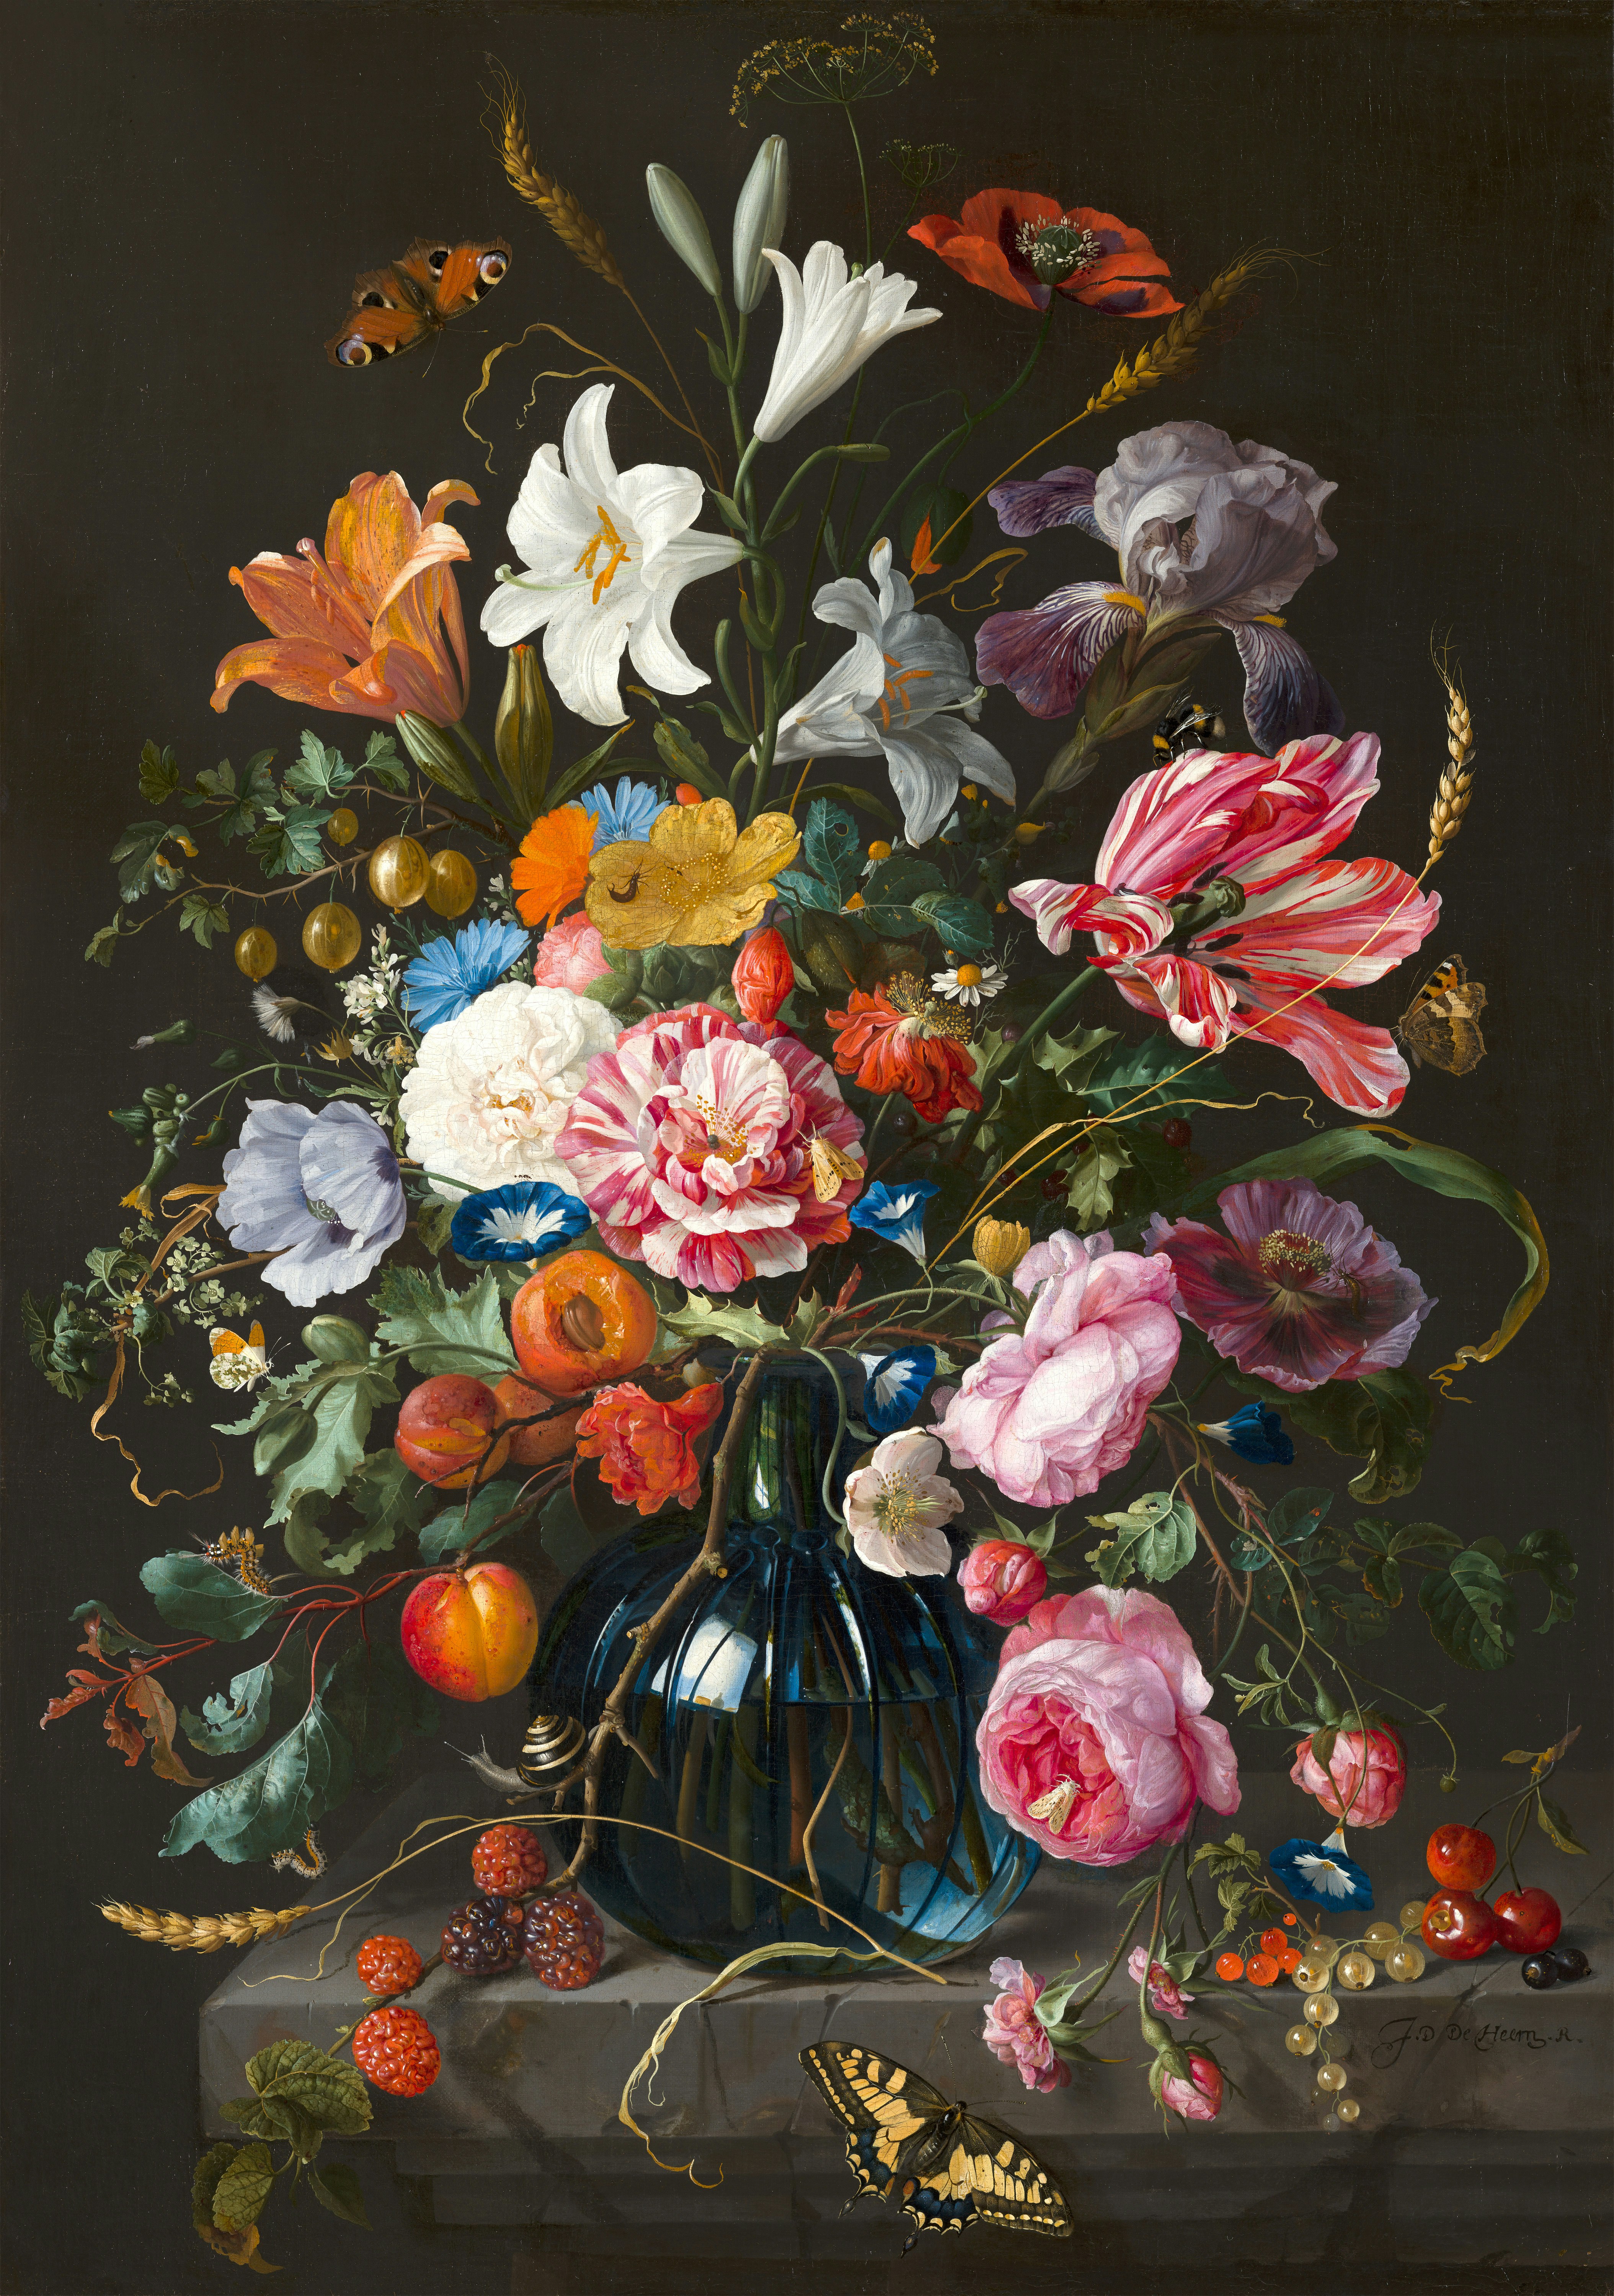 Vase of Flowers. Creator: Jan Davidsz de Heem. Date: 1670. Institution: Mauritshuis. Provider: Digitale Collectie. Providing Country: Netherlands. PD for Public Domain Mark